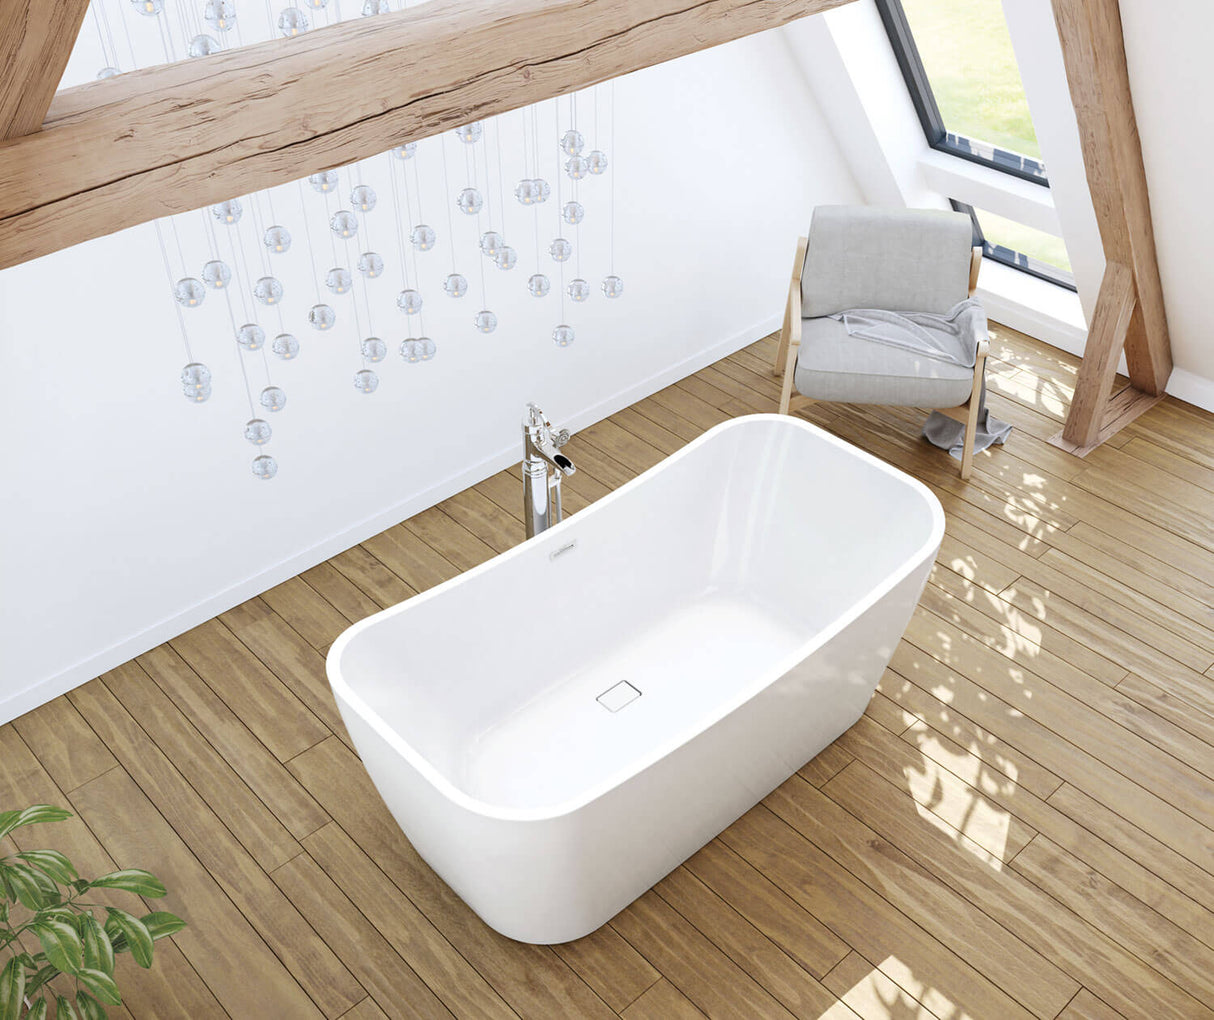 MAAX 106388-000-001-000 Villi 65 x 32 Acrylic Freestanding Center Drain Bathtub in White with White Skirt